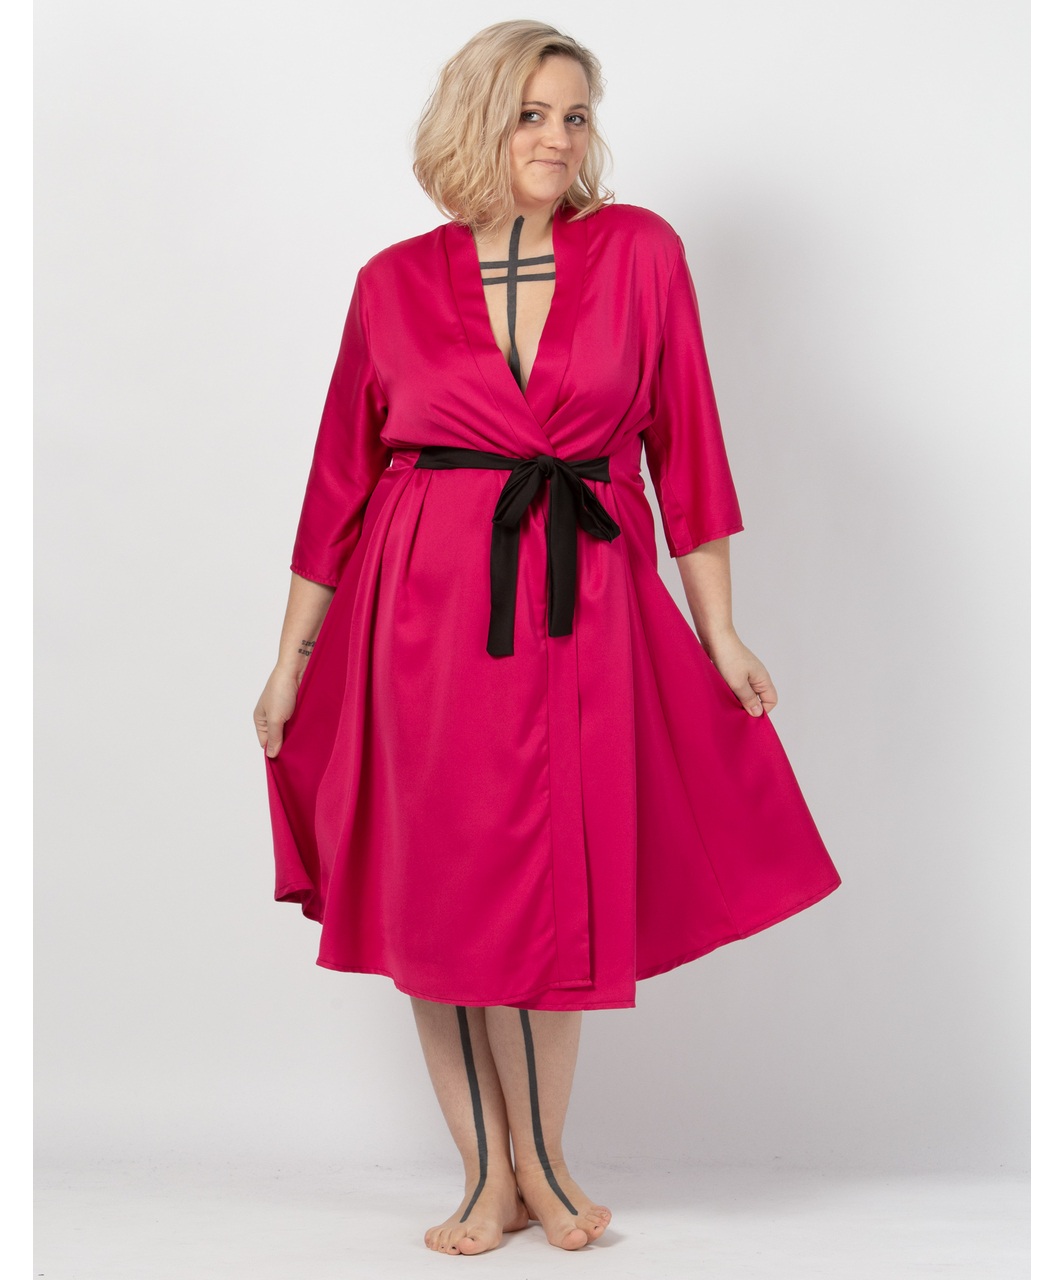 MAKE bright pink robe with black sash